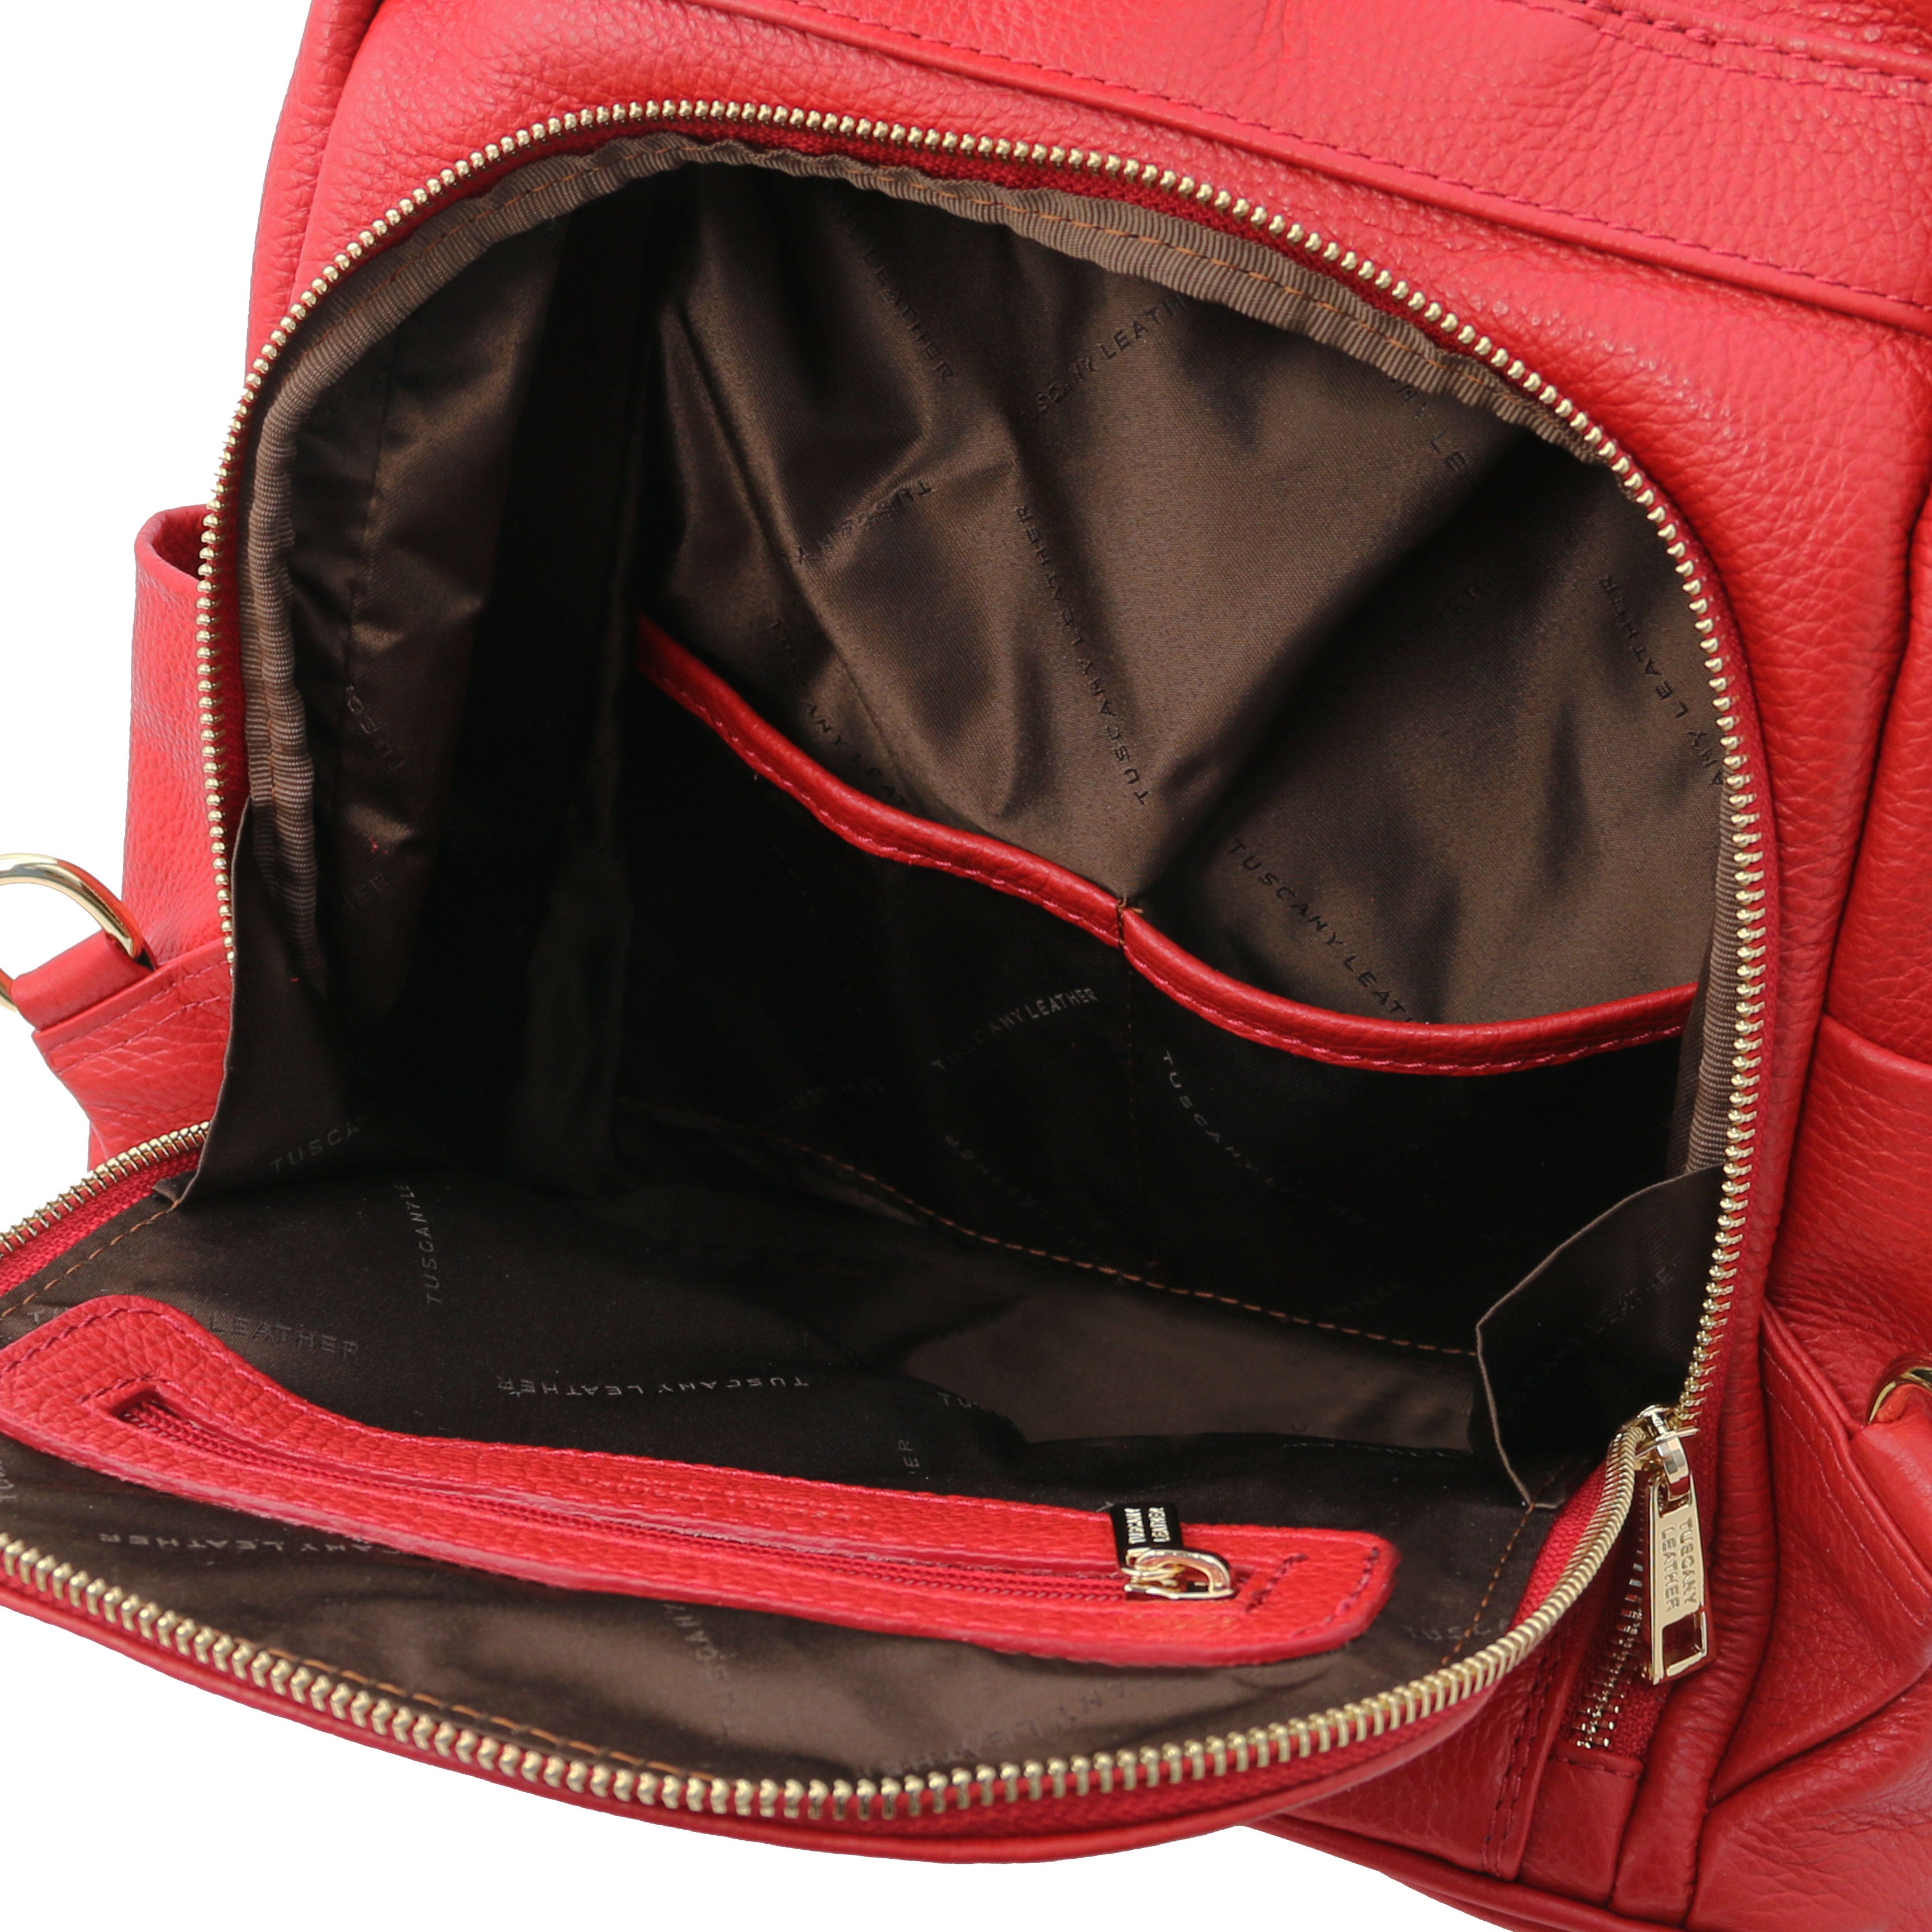 Tuscany Leather rugtas zacht leer TL Bag rood binnenvakken tas